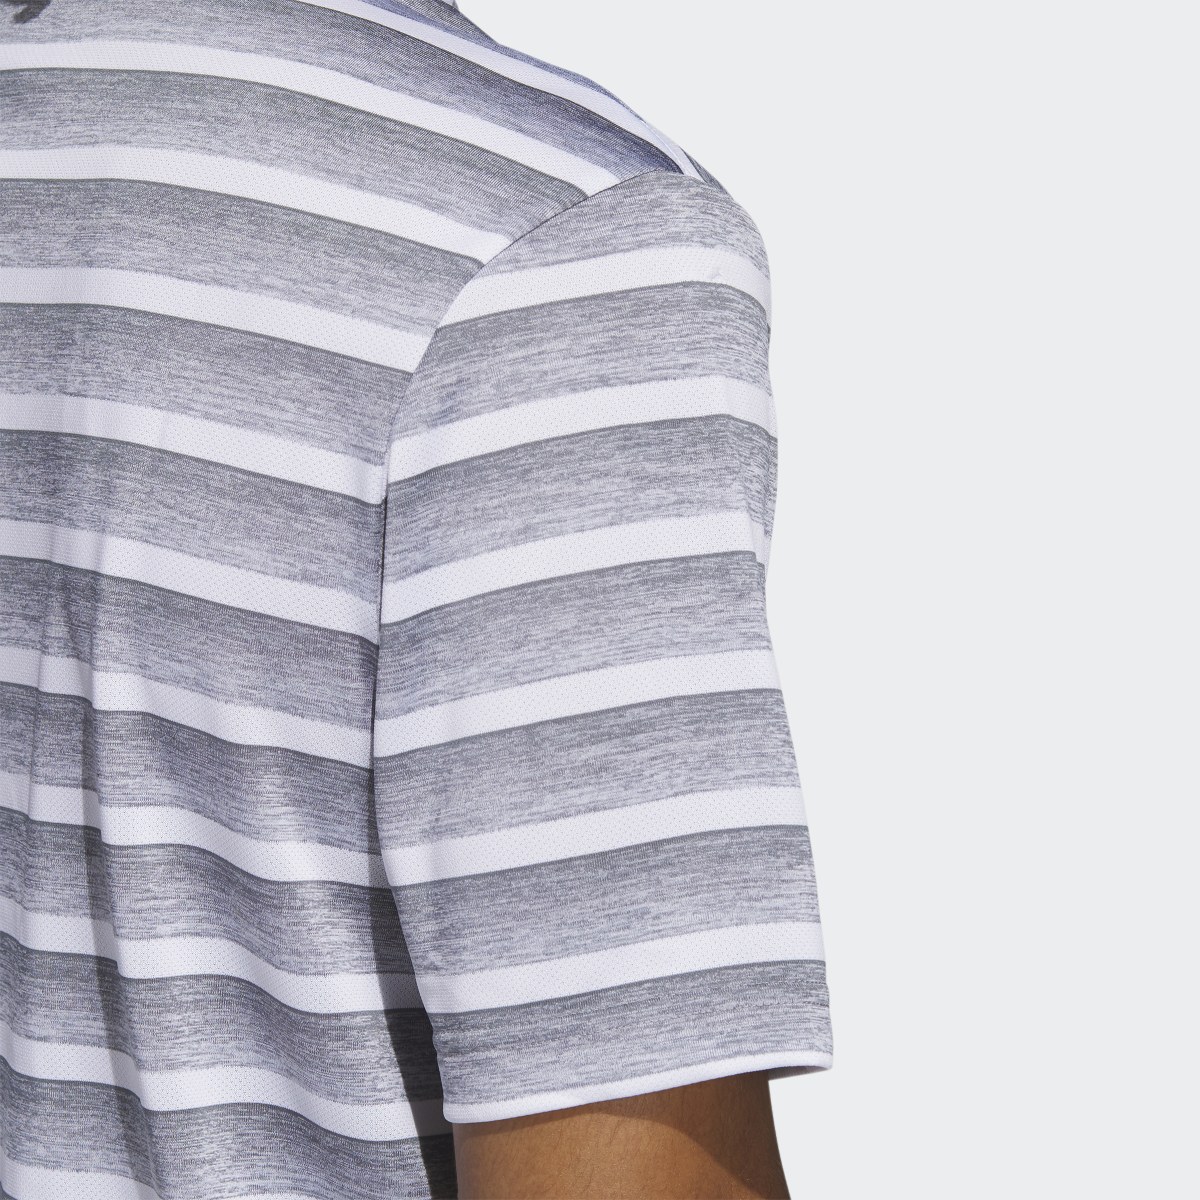 Adidas Two-Color Striped Polo Shirt. 6